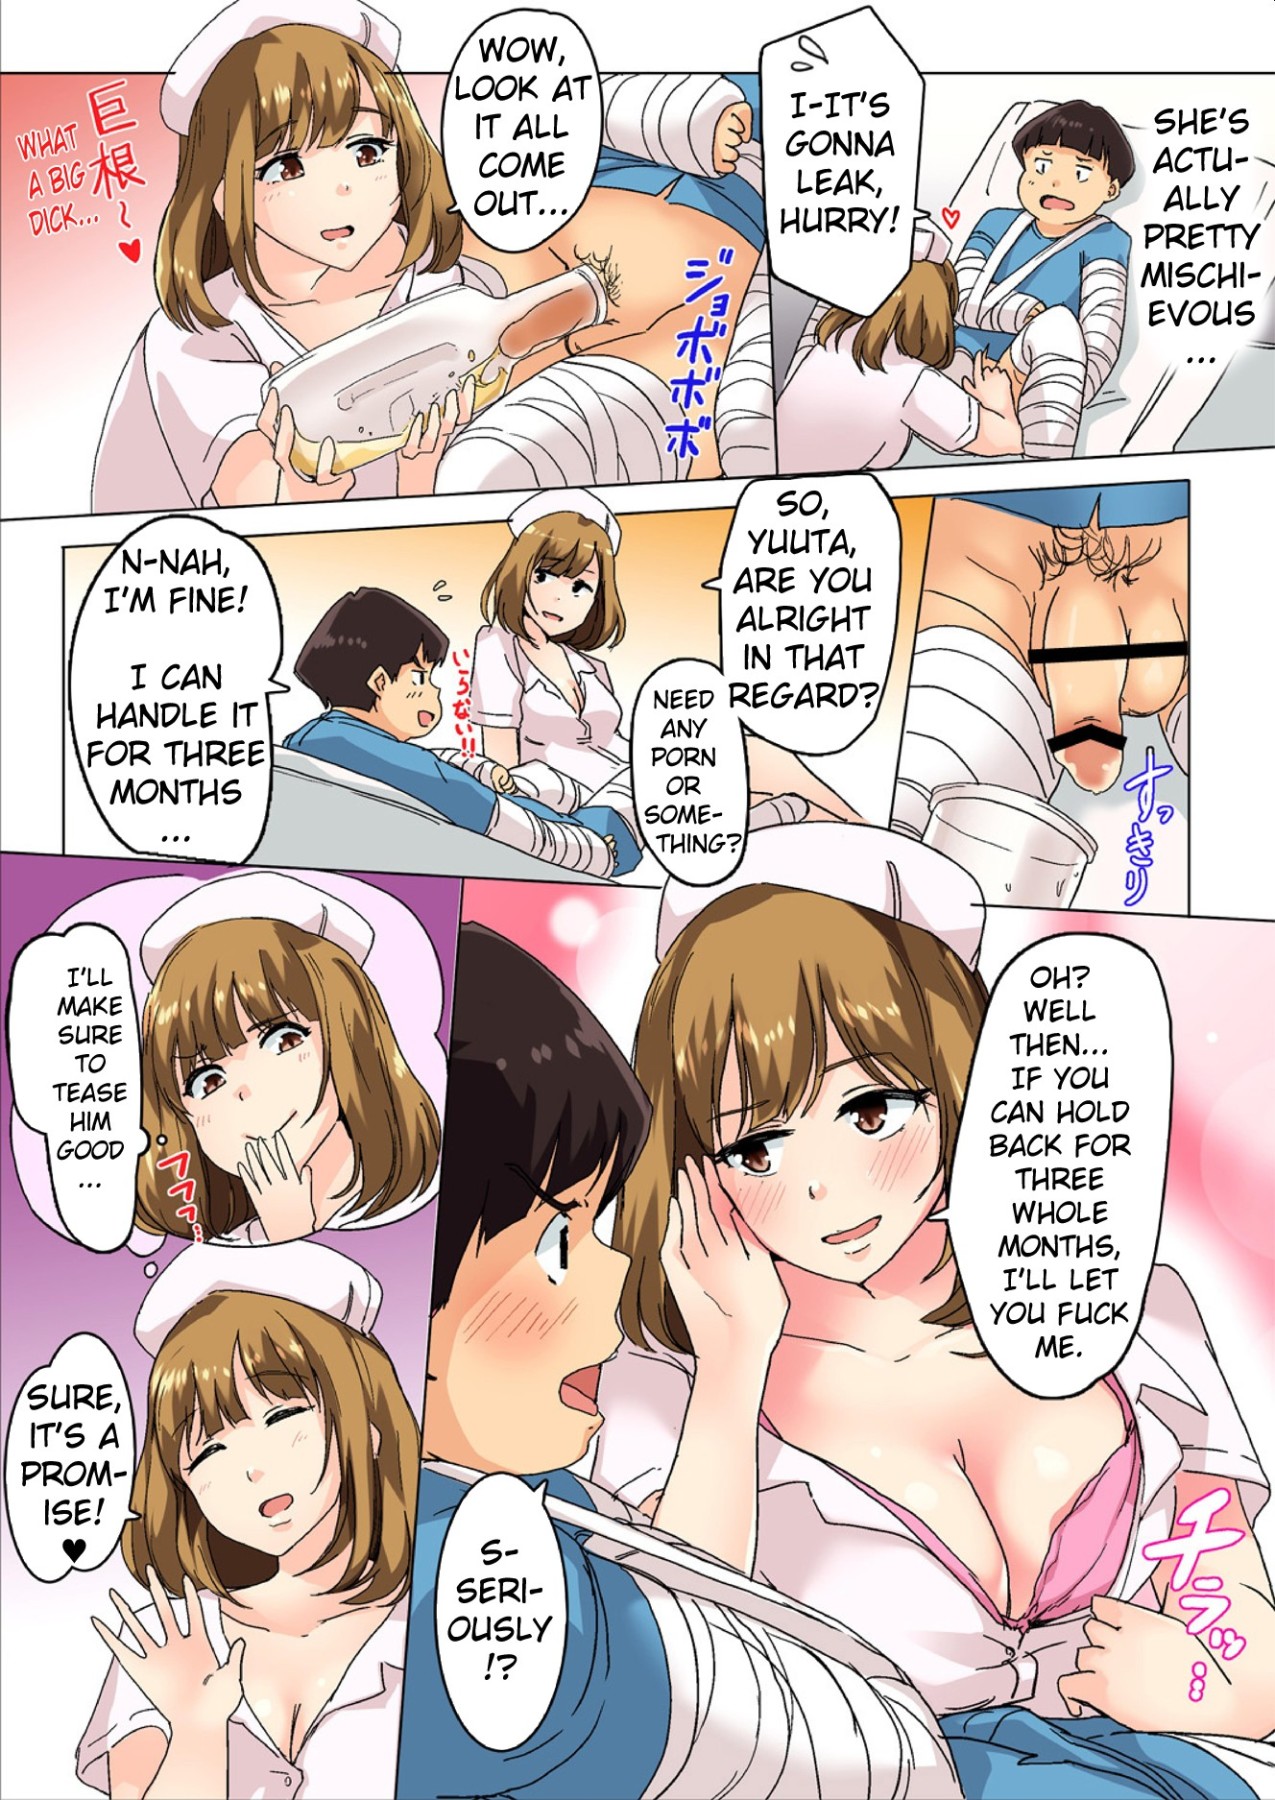 Read A Blue Balling Nurse S Agonizing Curse Hentai Manga Page 3